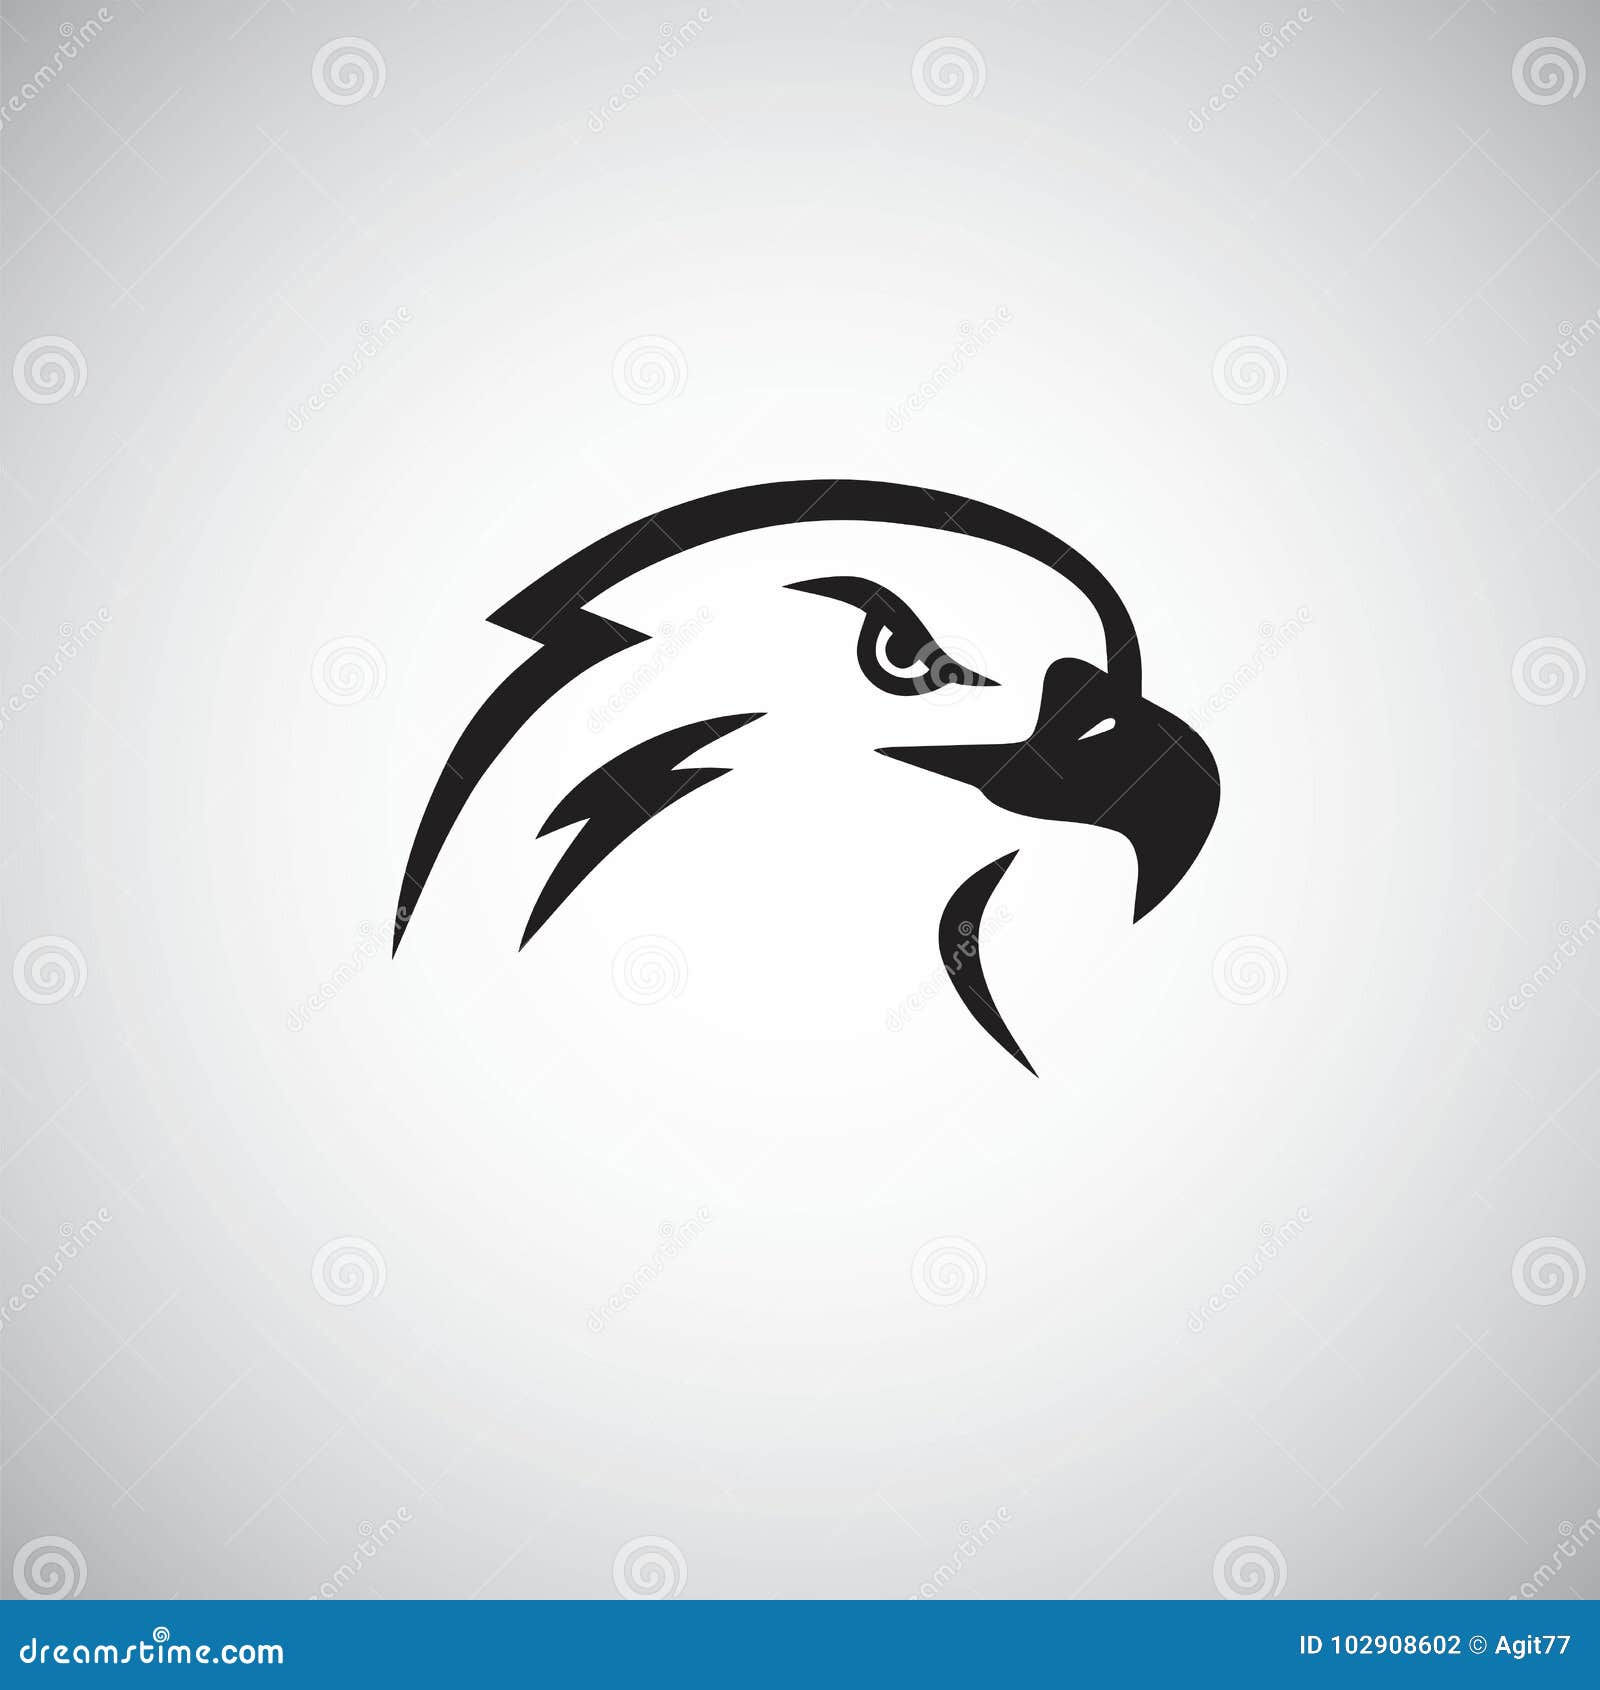 Eagle Logo Or Mascot Template Simple Illustration Stock